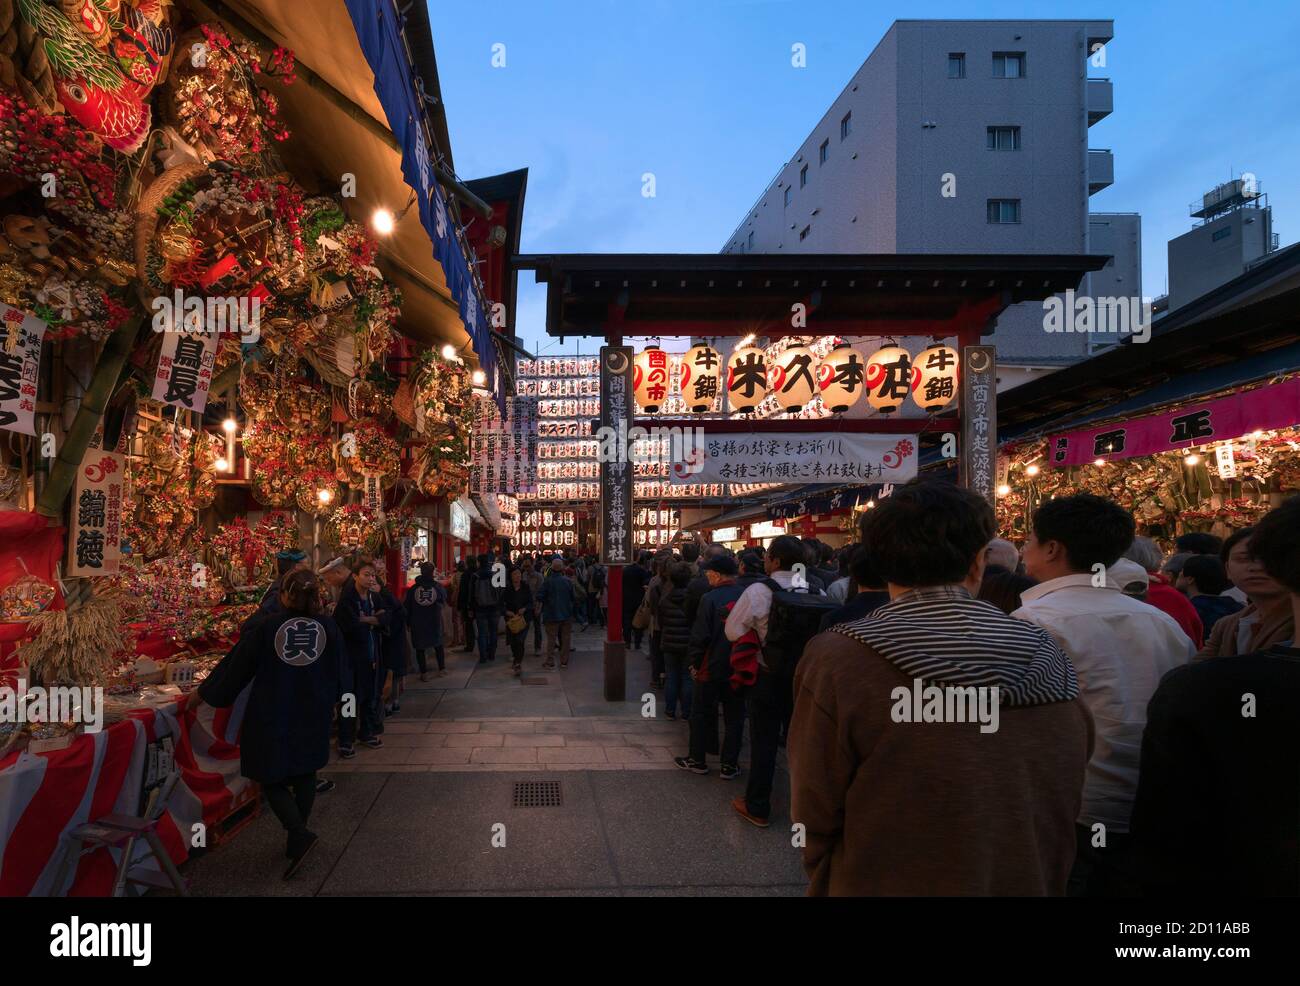 asakusa, japan - november 08 2019: People line up to enter the Ootori shrine decorated at night with luminous paper lanterns to buy auspicious rakes a Stock Photo